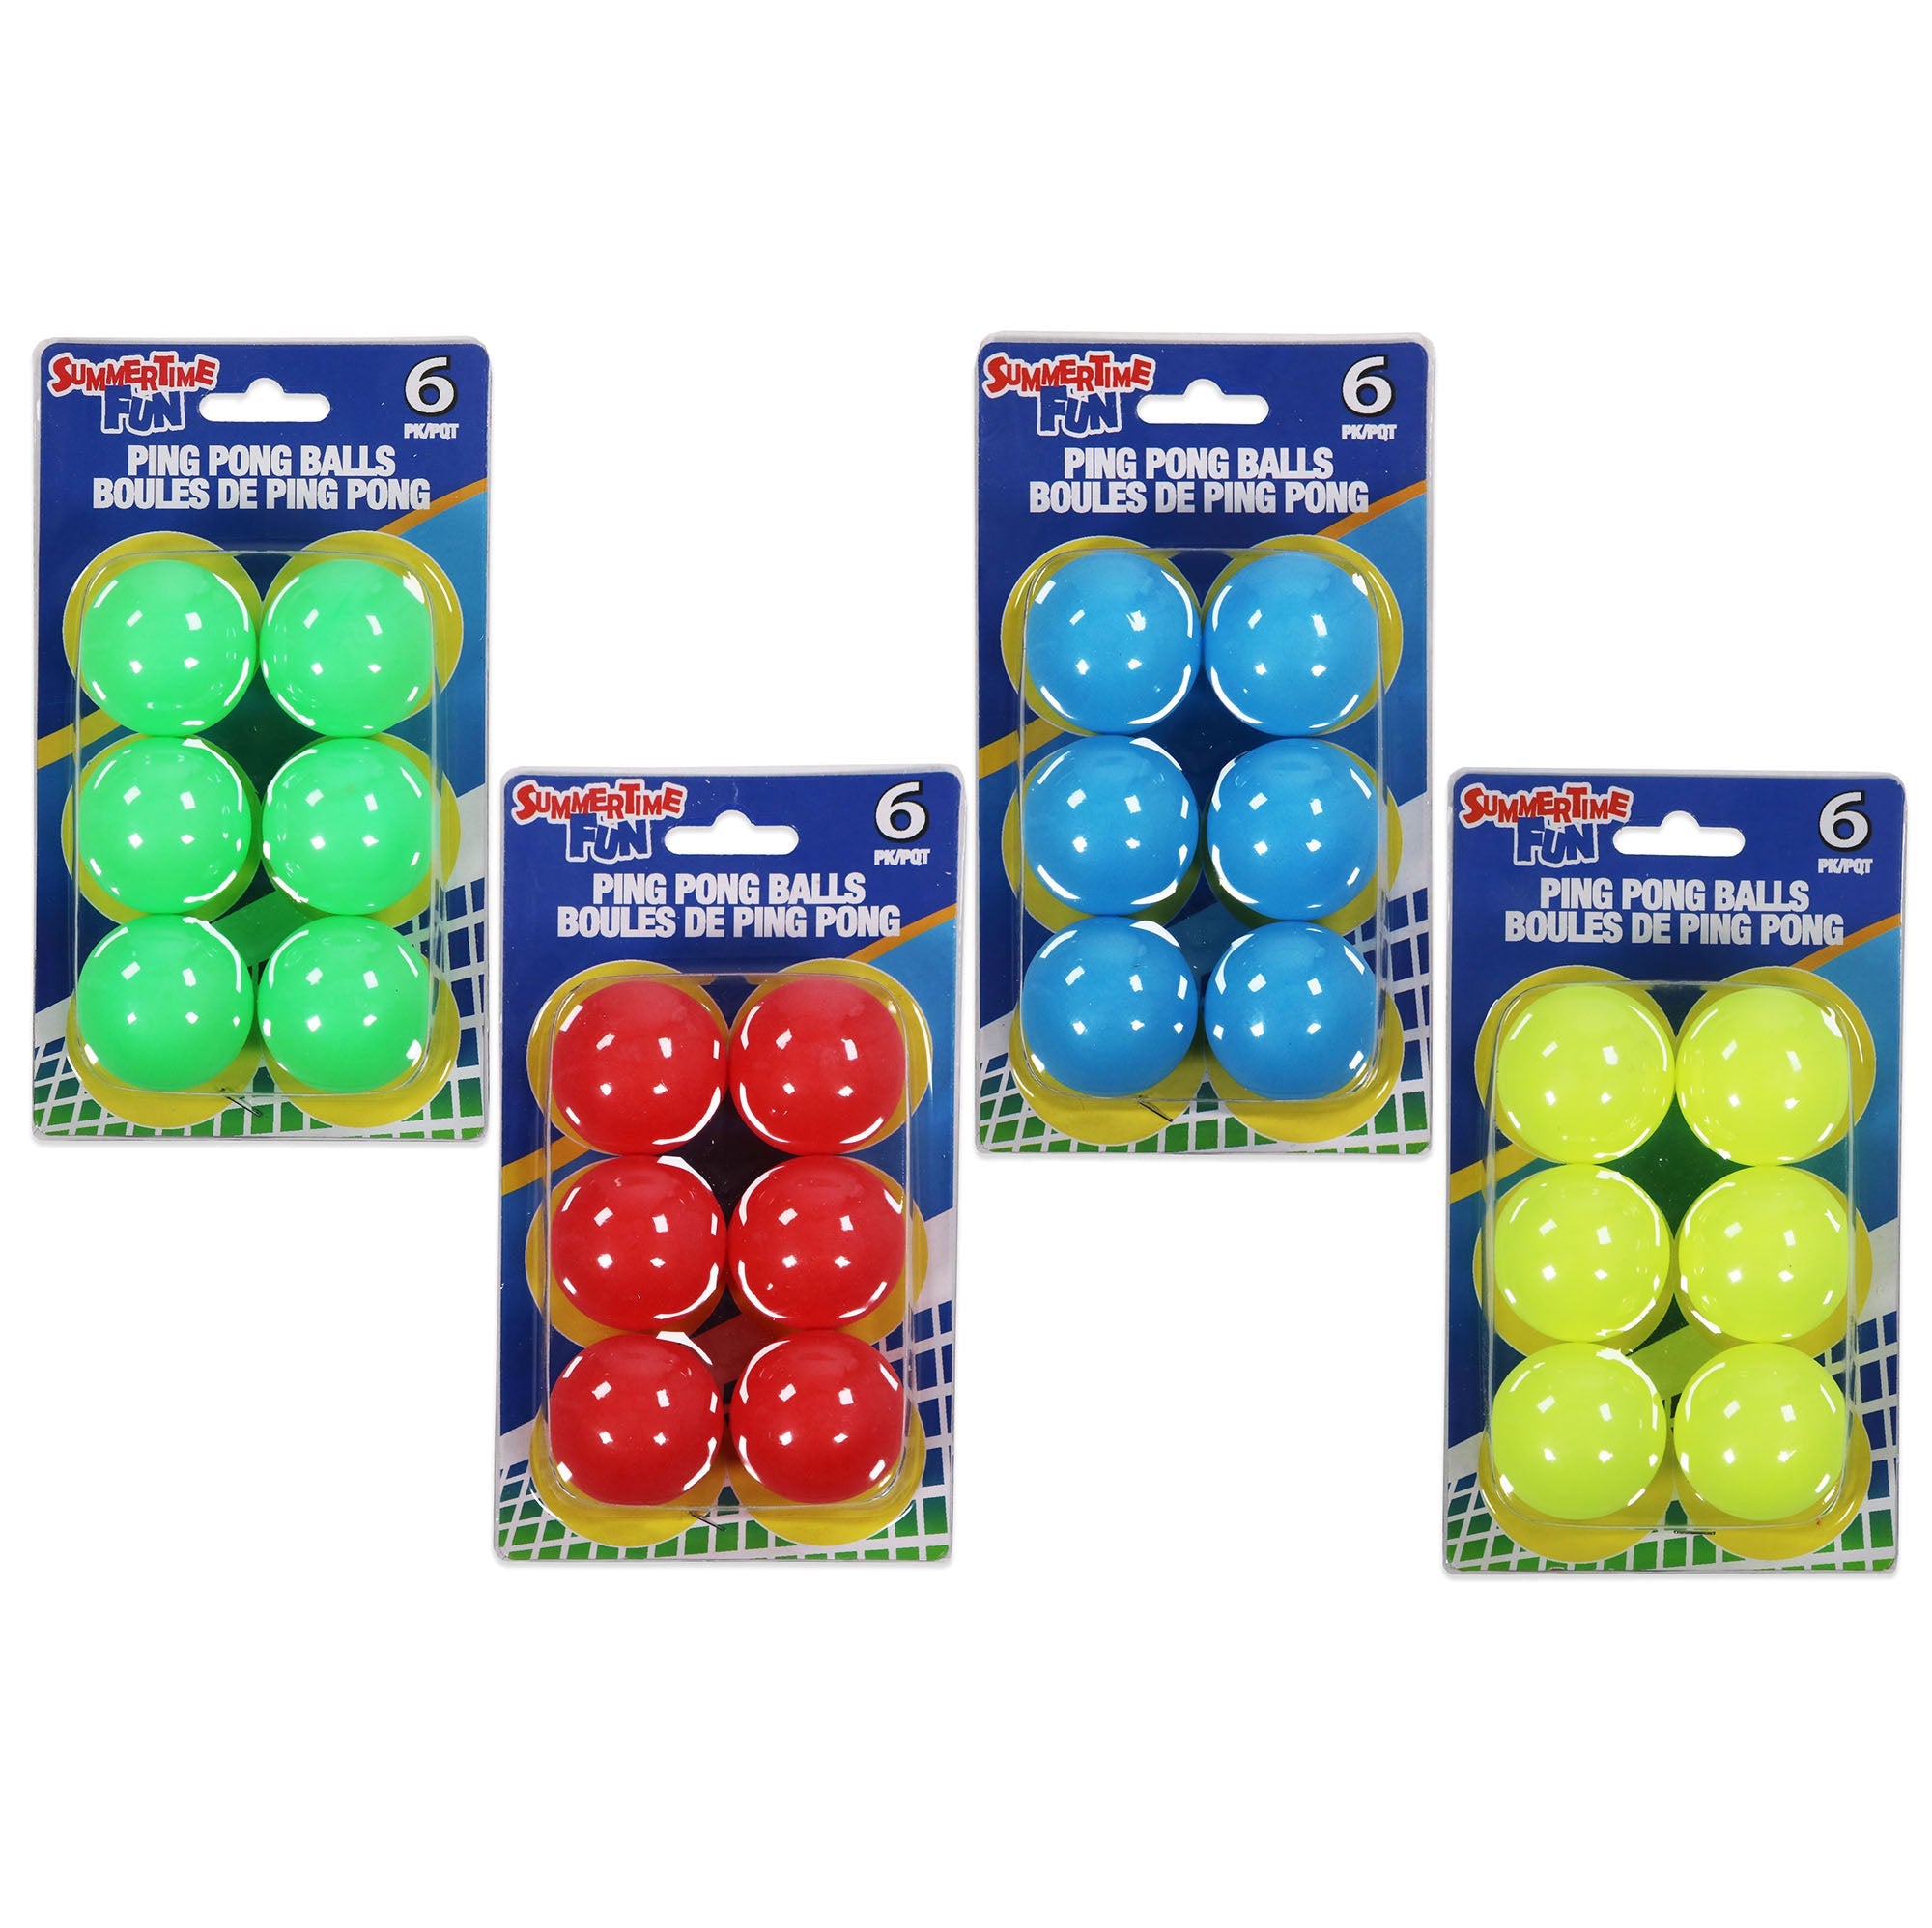 6 Ping Pong Balls